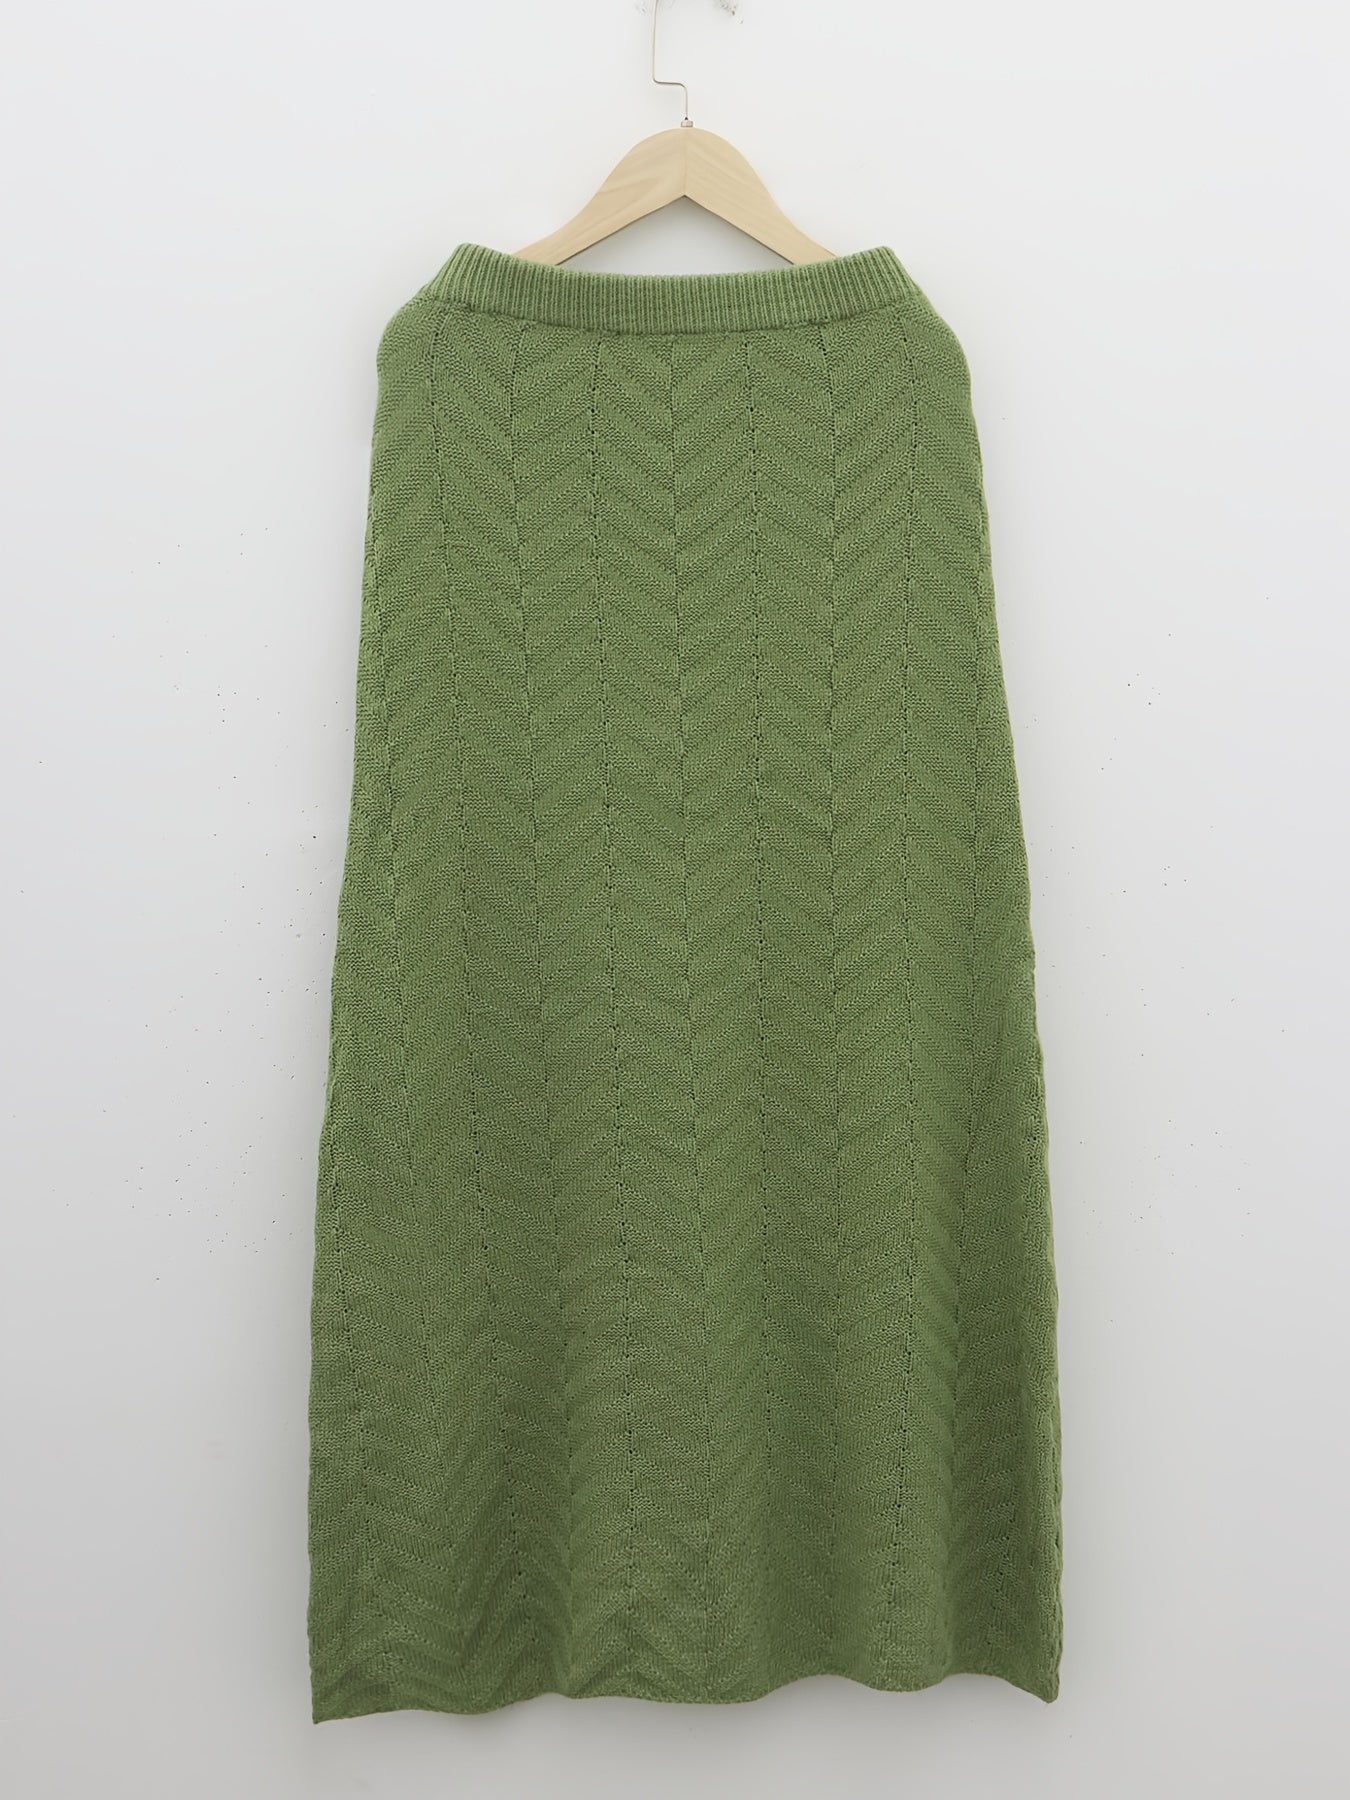 Antmvs Solid Textured High Waist Knitted Skirt, Elegant Maxi Skirt For Fall & Winter, Women's Clothing